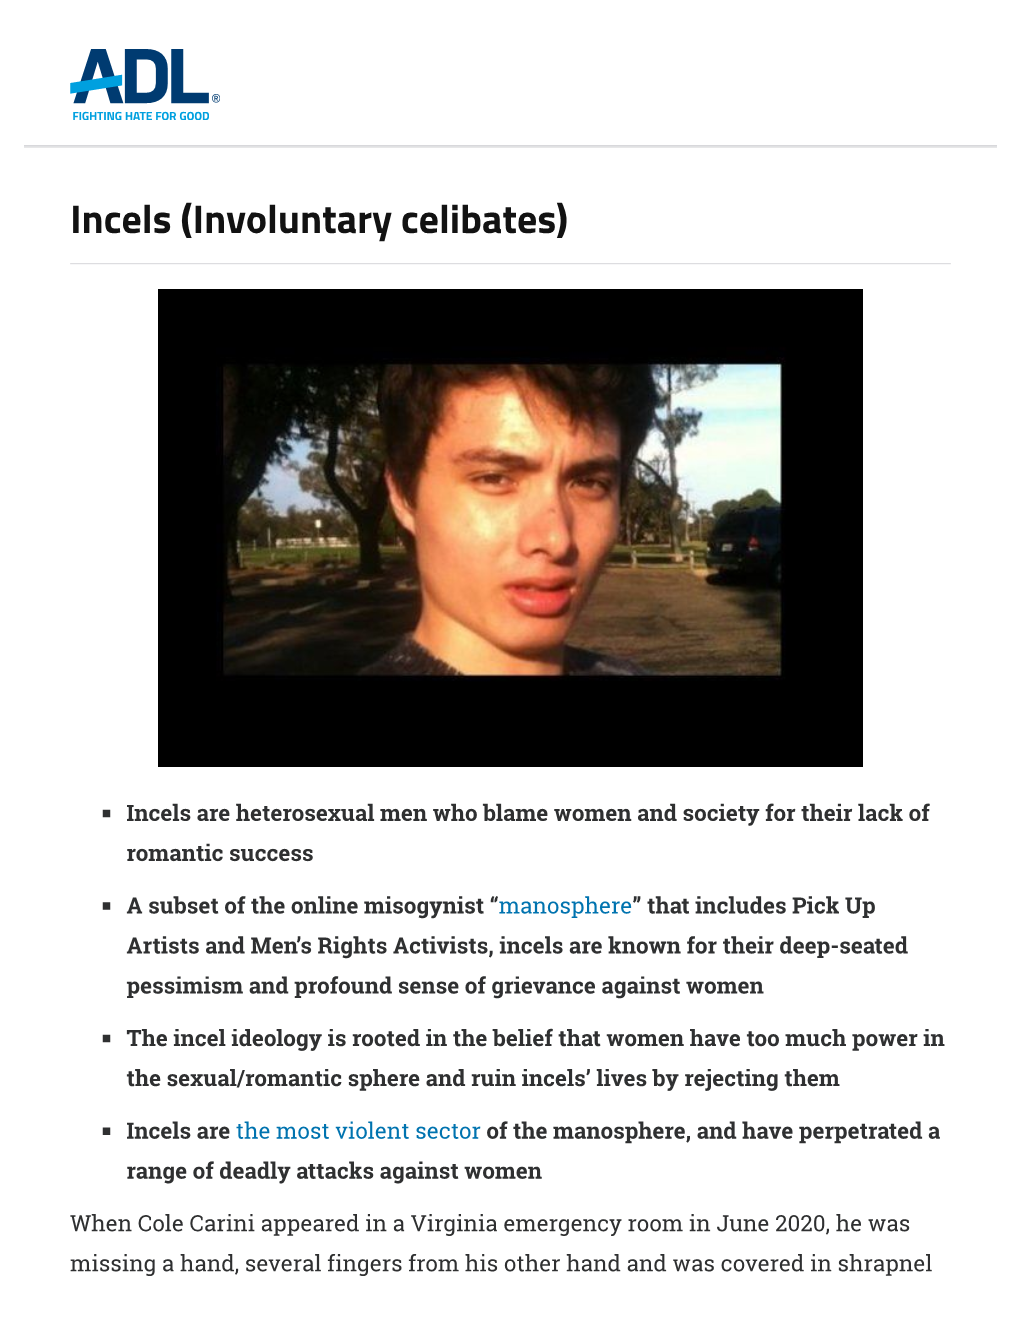 Incels (Involuntary Celibates)